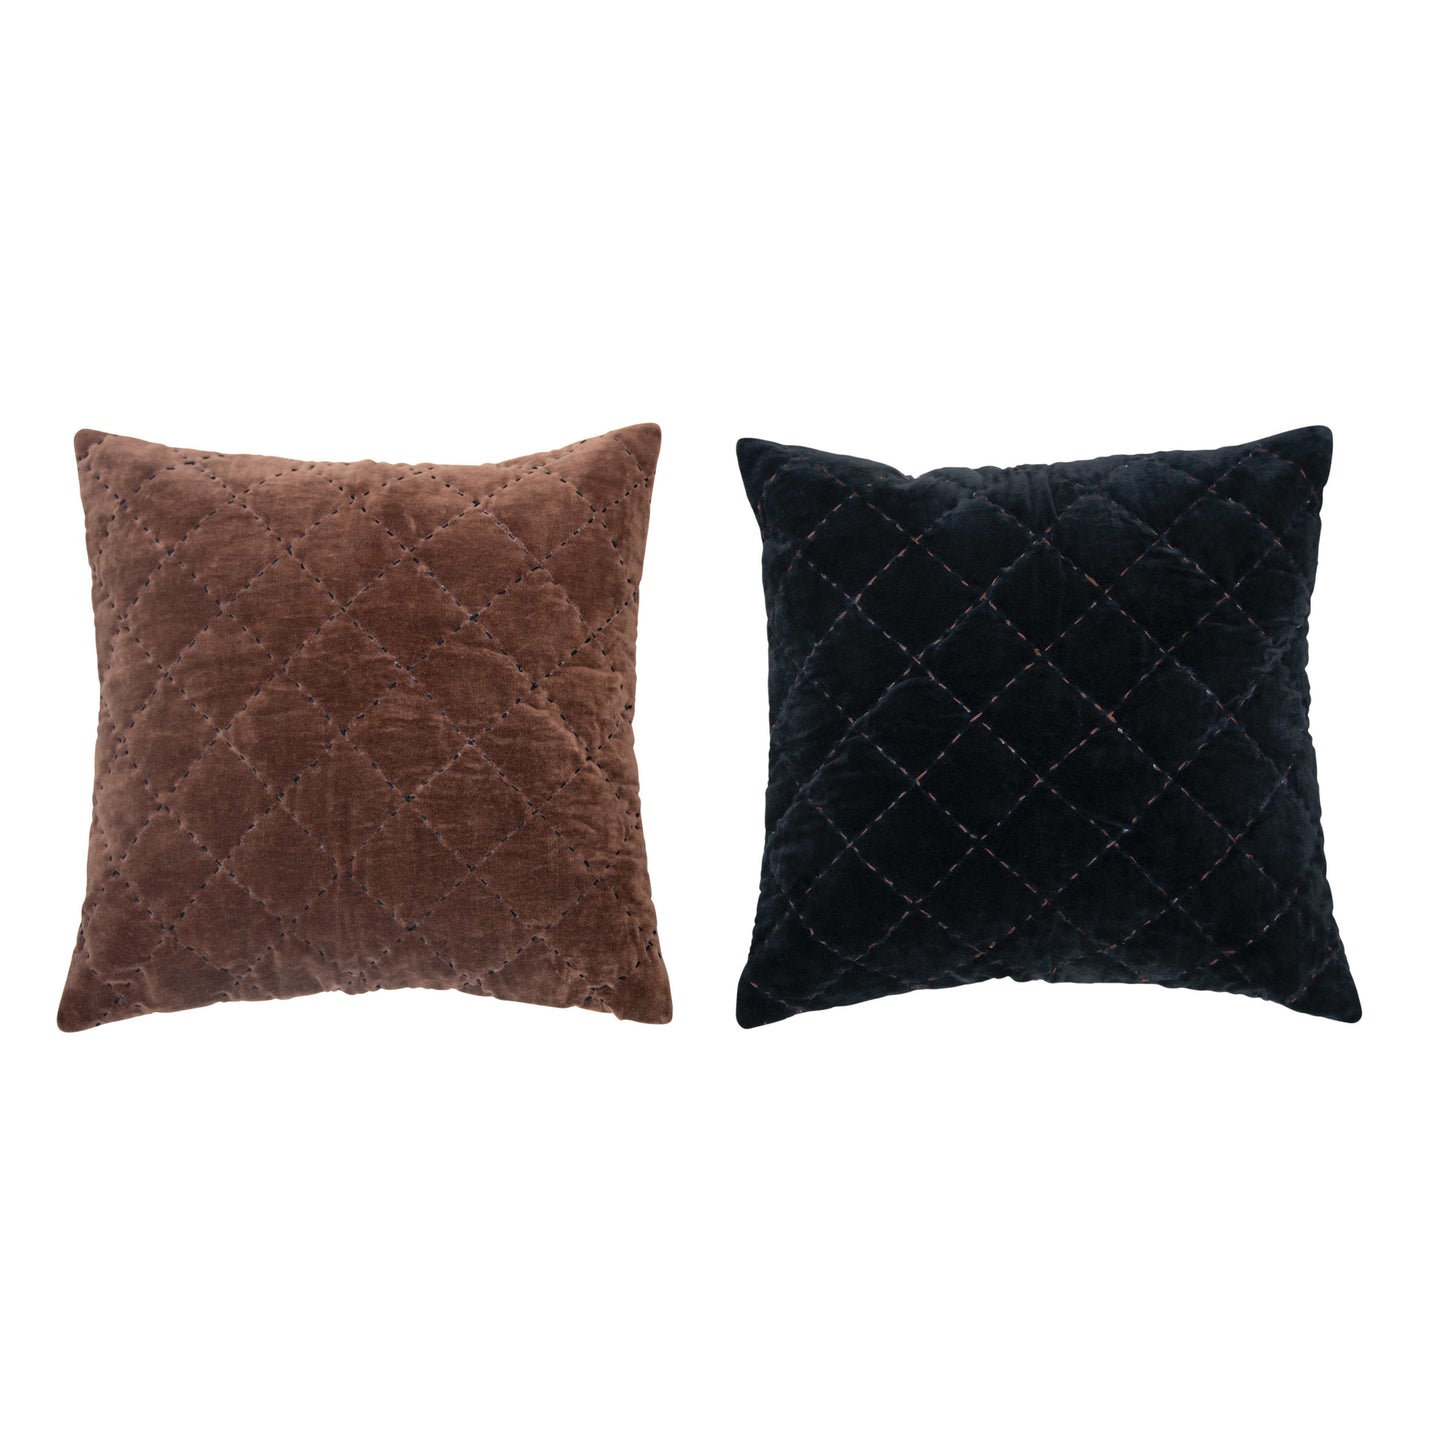 Cotton Velvet Pillow with Kantha Stitch, 2 Colors